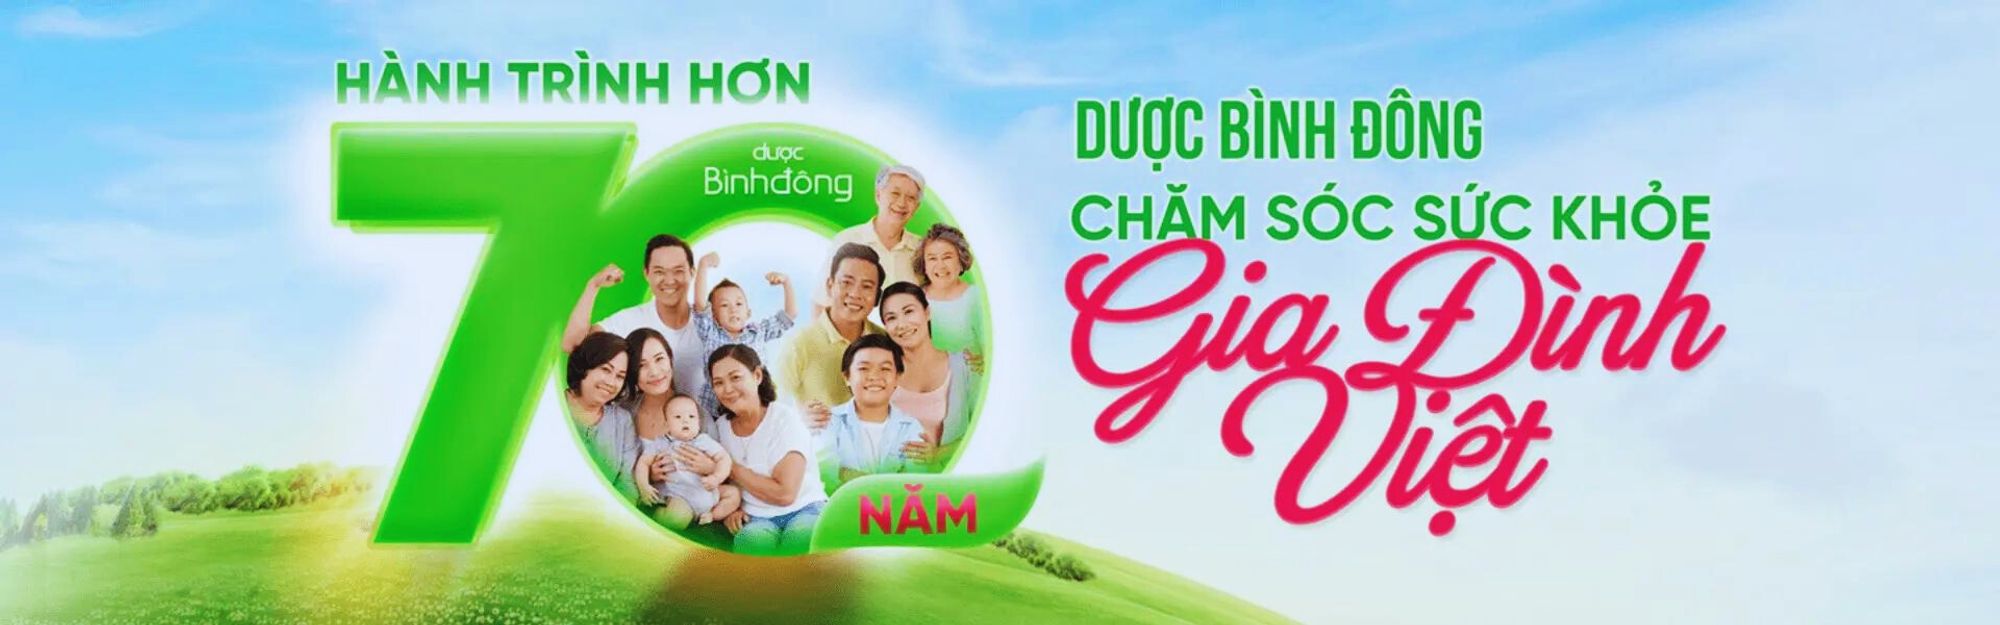 Nguyễn Thị Thuỳ Trang